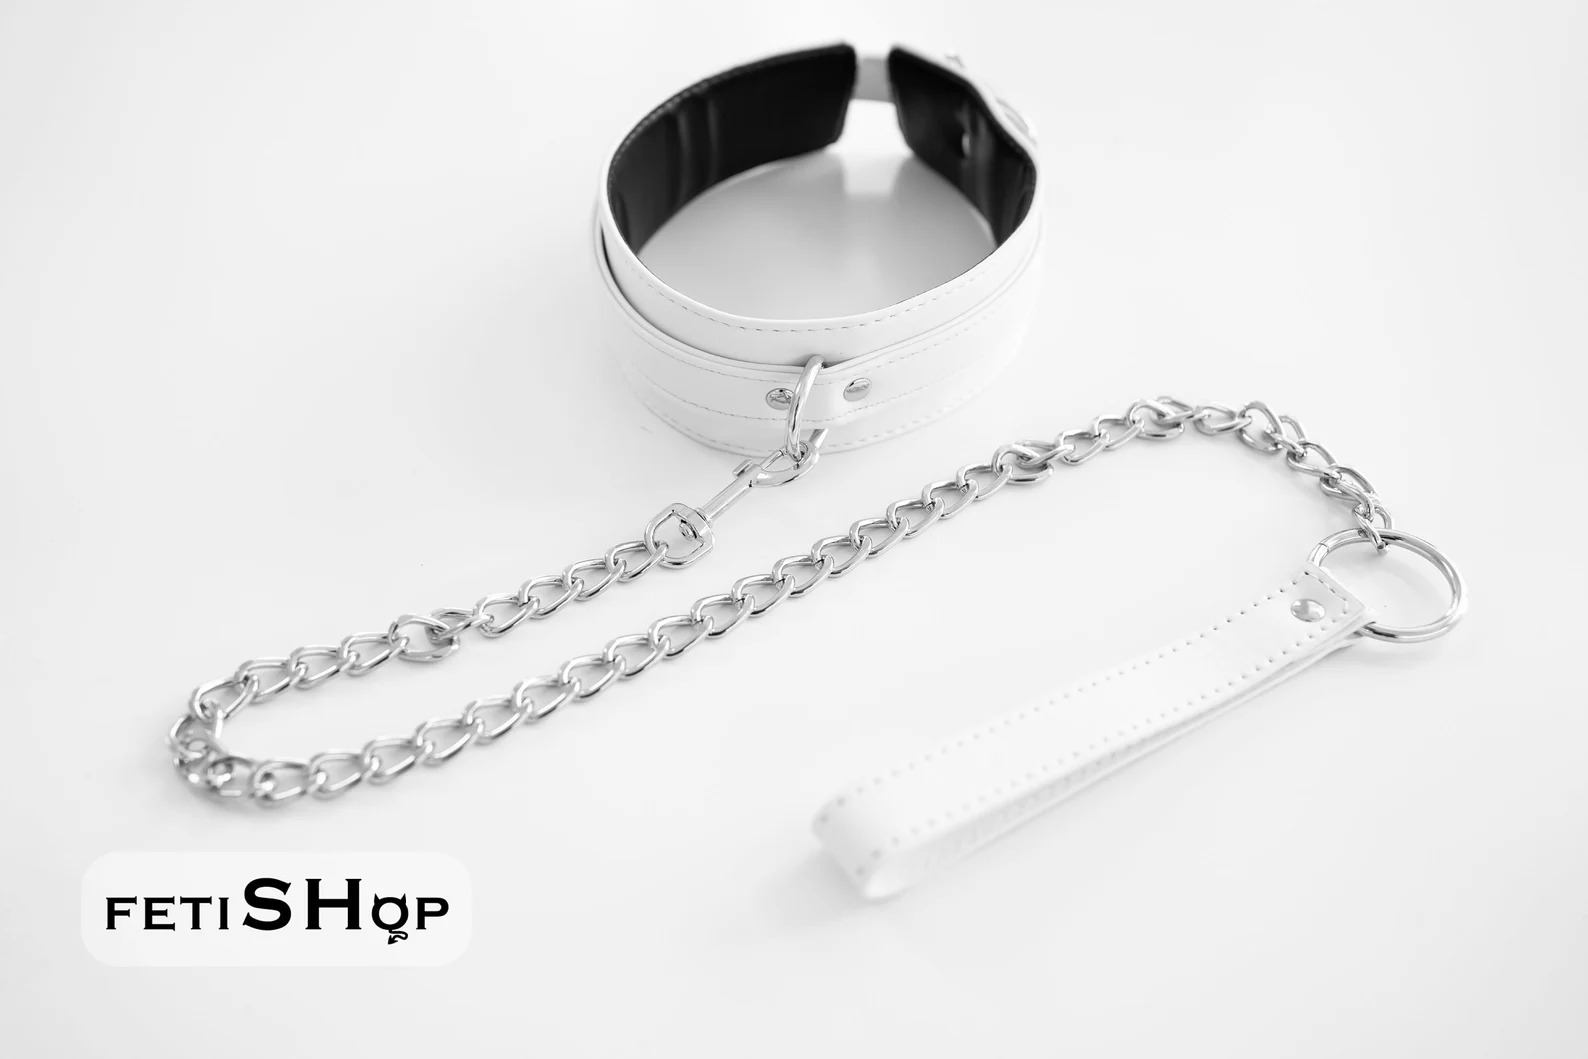 BDSM white collar choker with chain leash